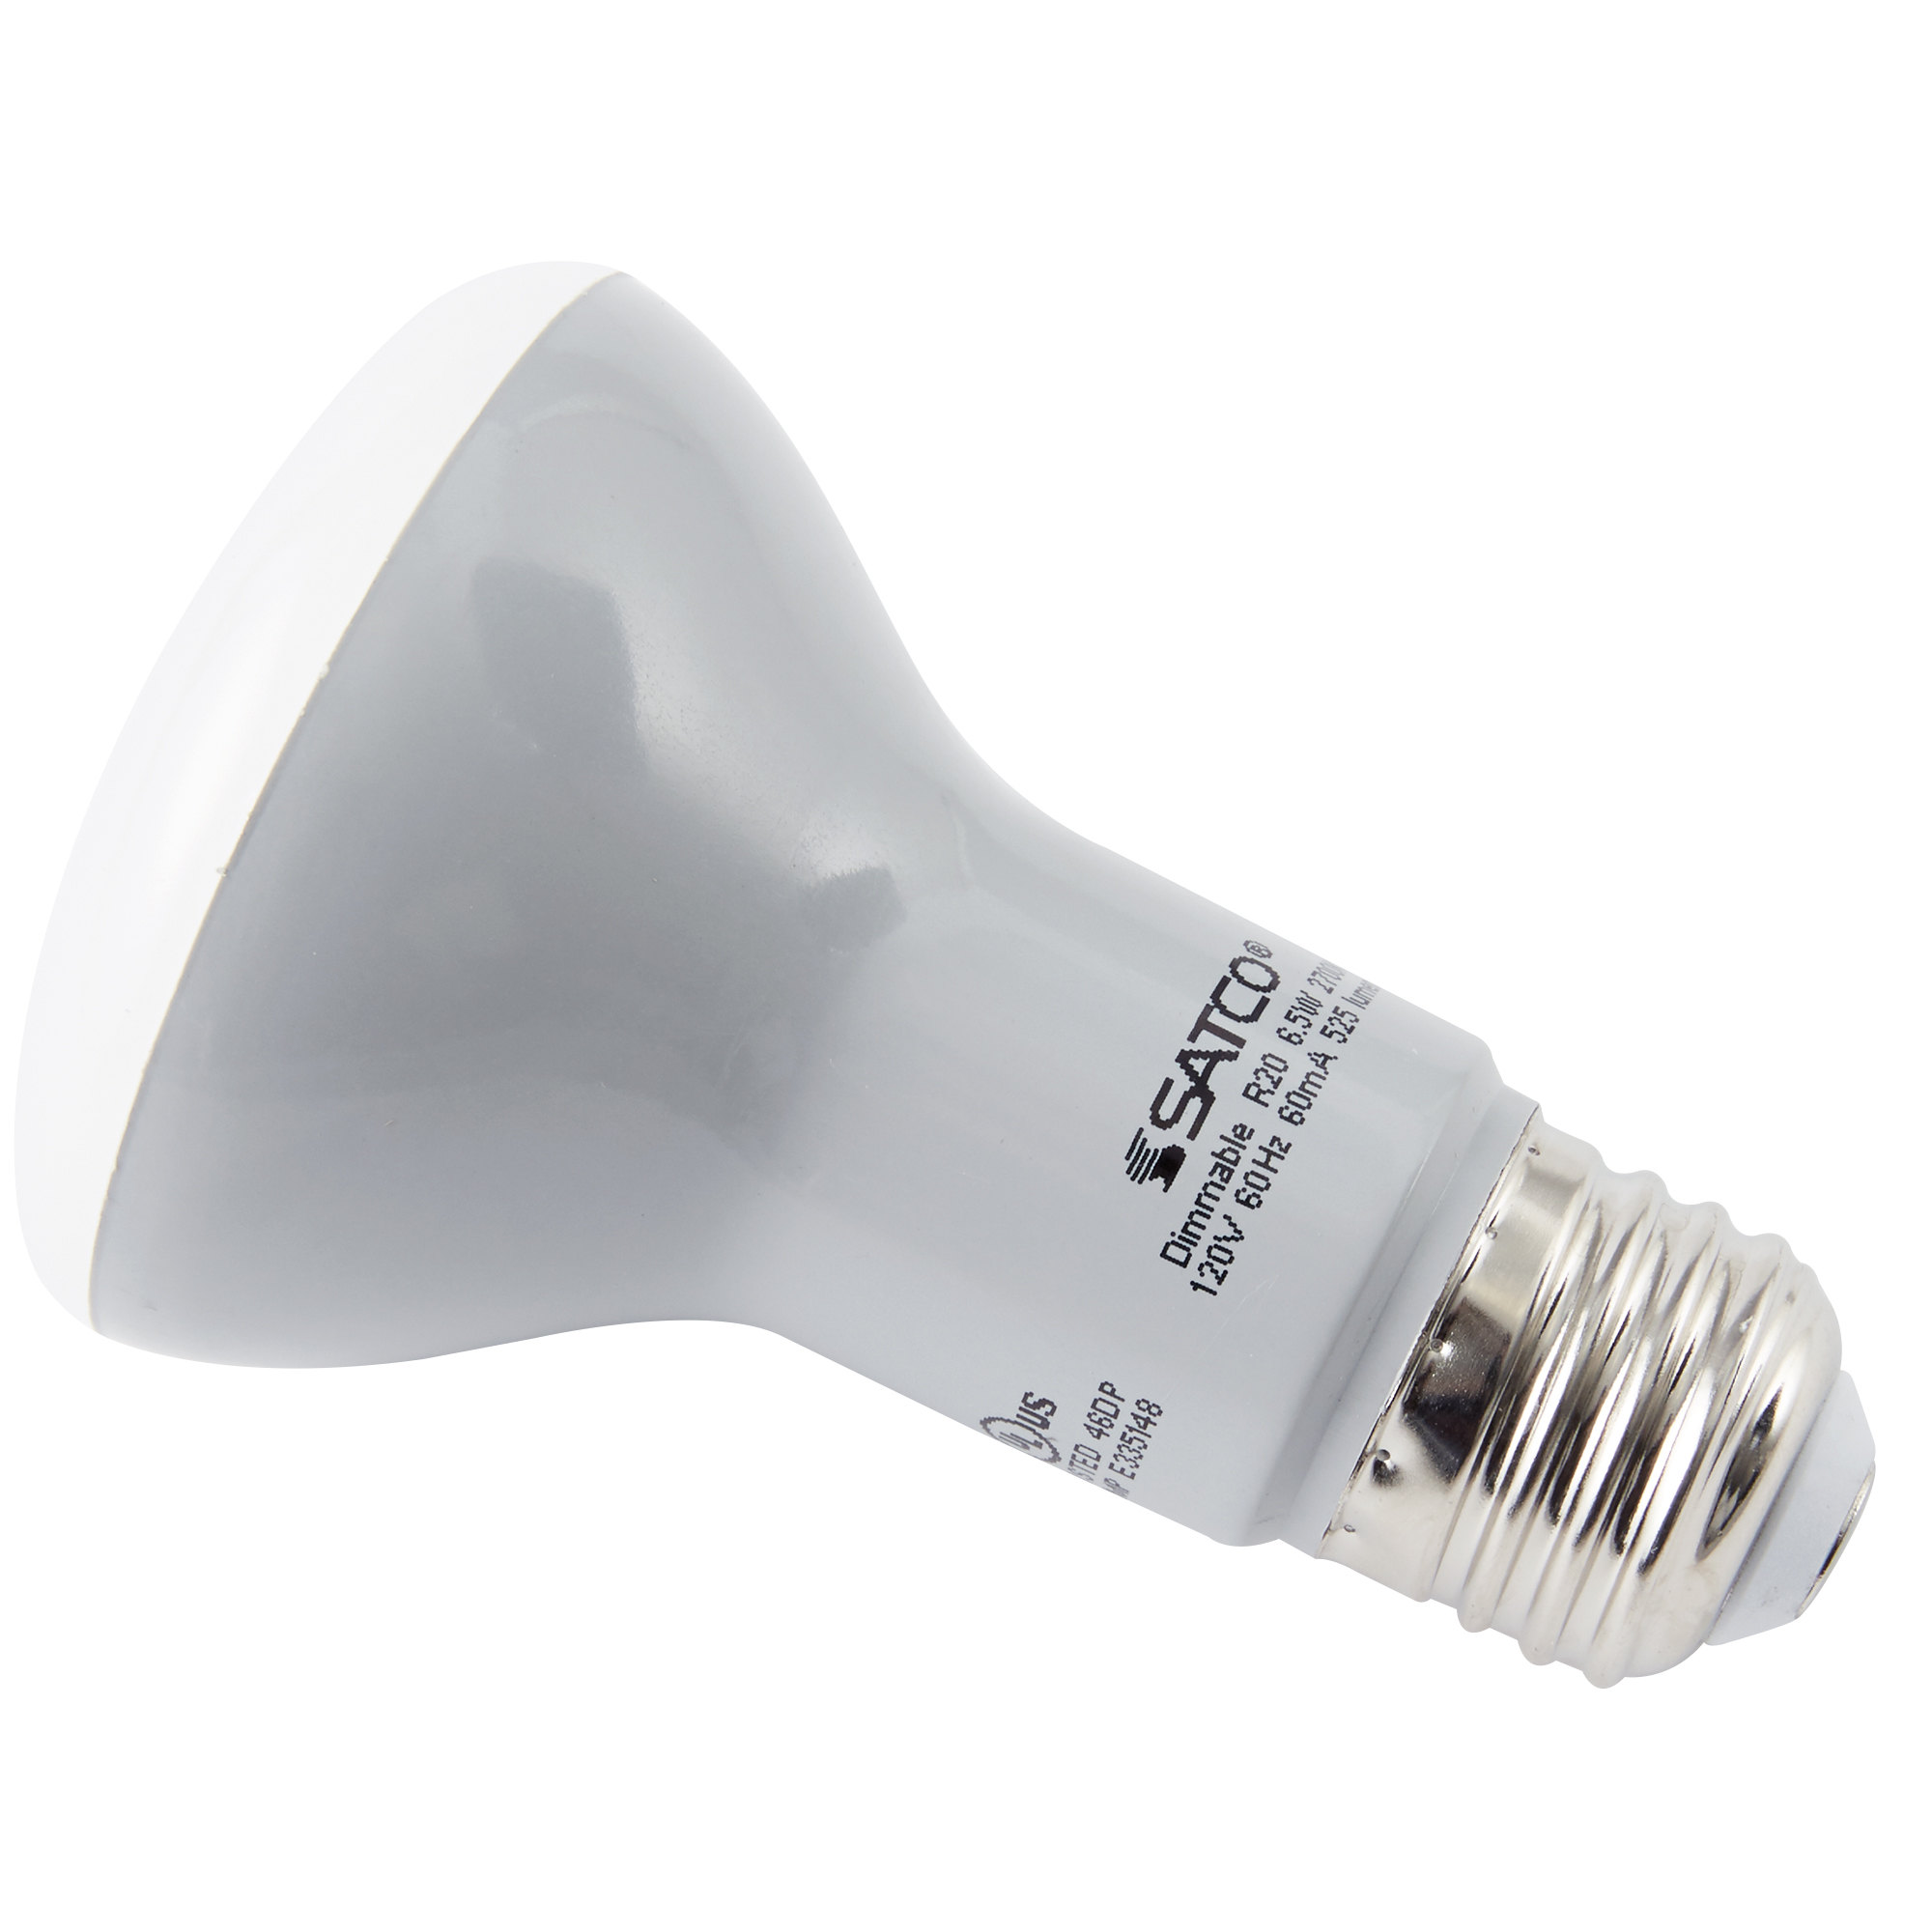 What Does A 6.5-Watt LED Bulb Equivalent